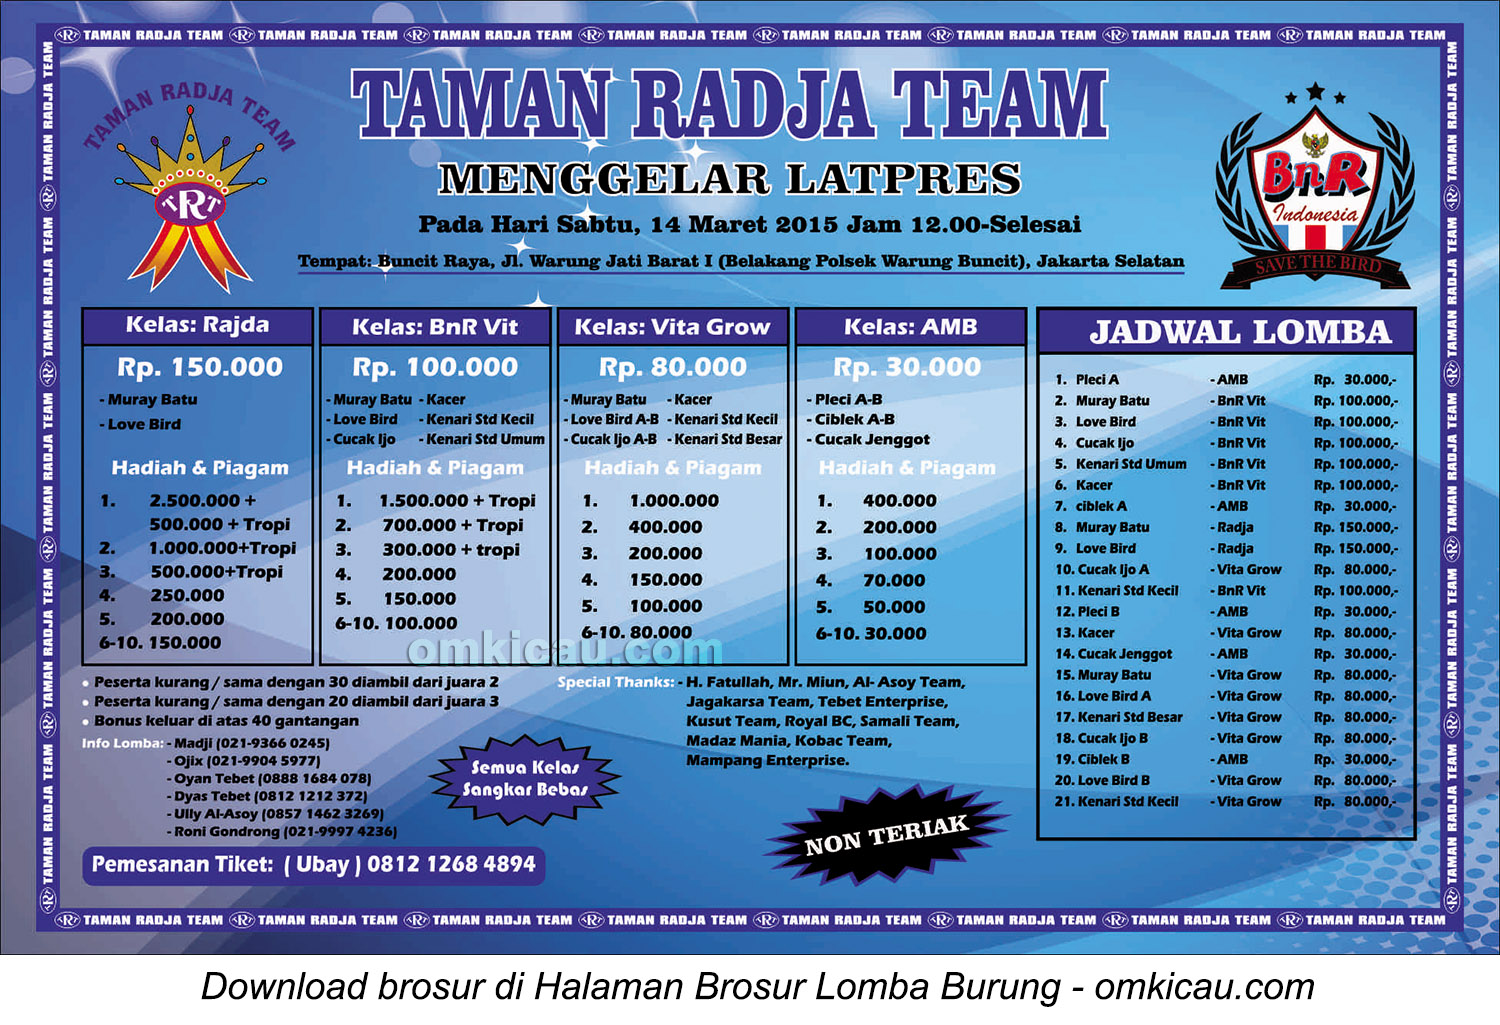 Brosur Latpres Taman Radja Team, Jakarta Selatan, 14 Maret 2015